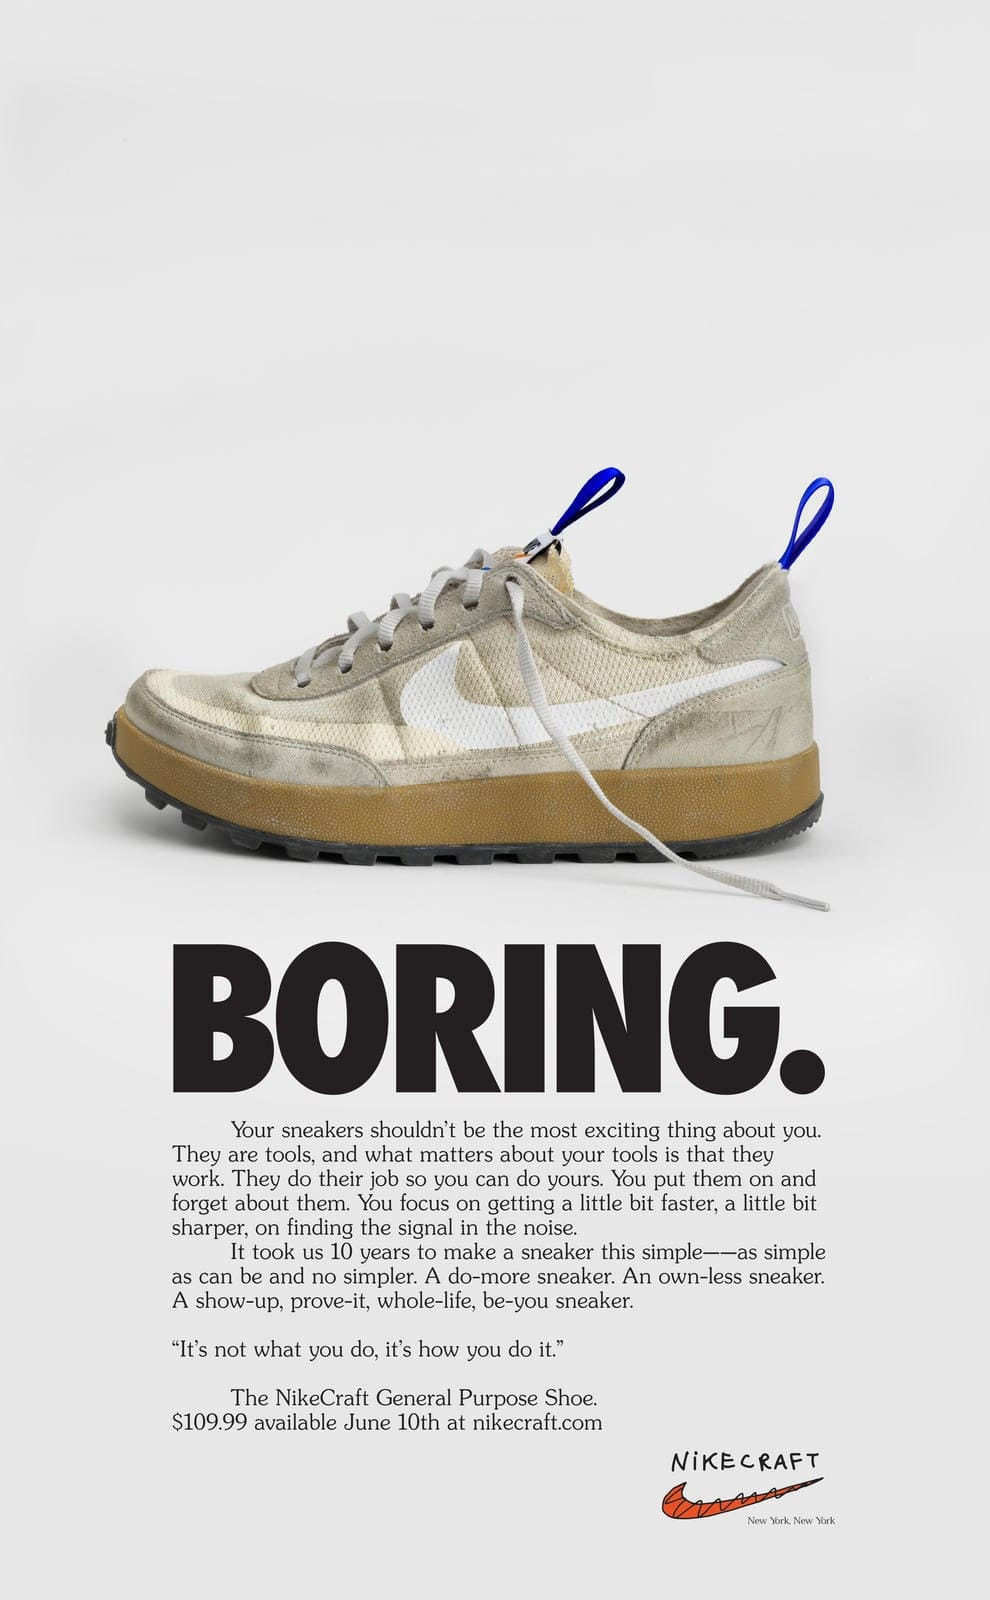 Tom Sachs x NikeCraft General Purpose Shoe GPS DA6672-200 Poster Boring